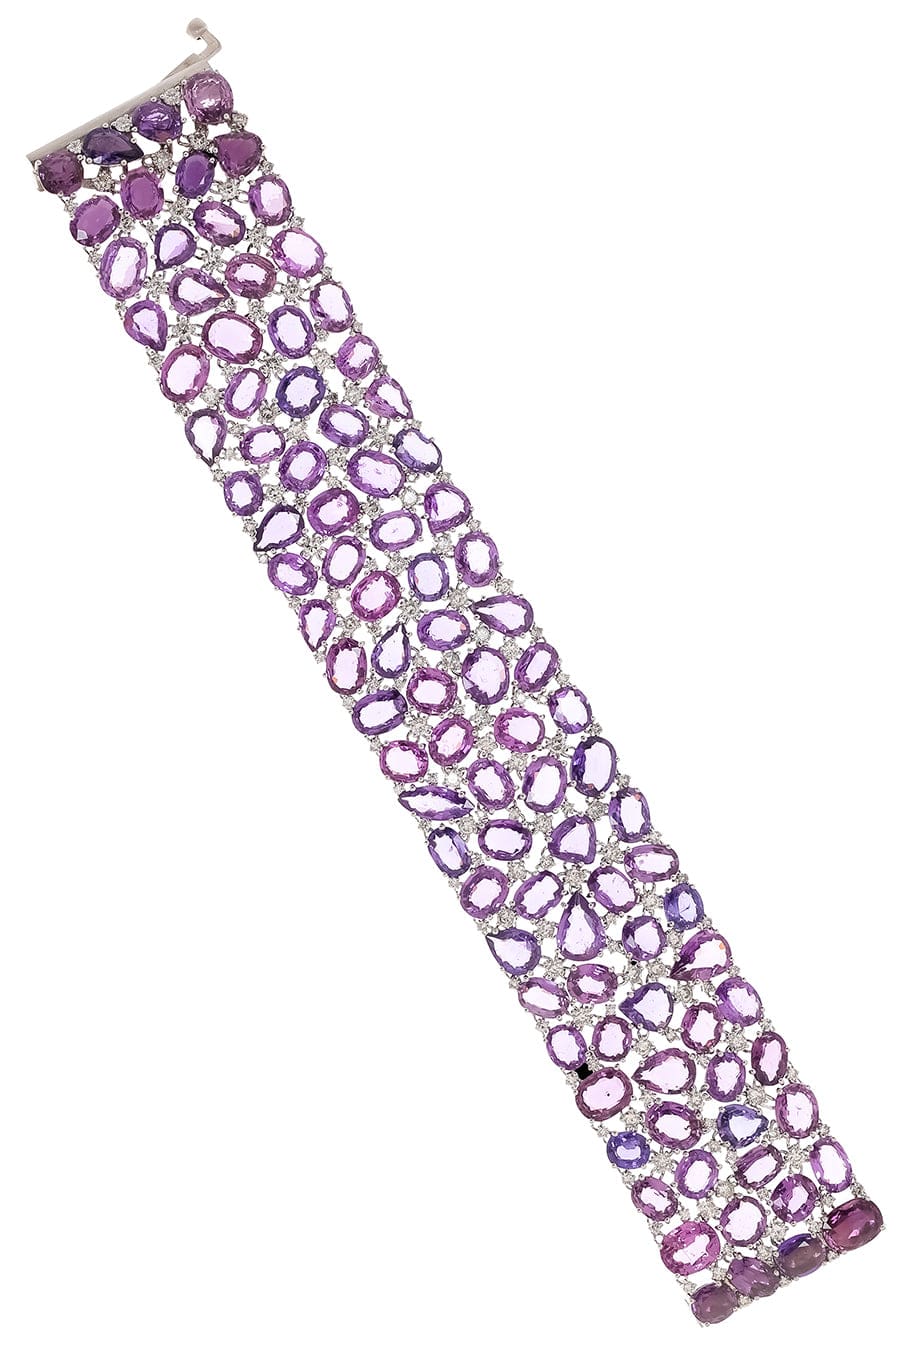 SUTRA-Purple Sapphire Bracelet-WHITE GOLD